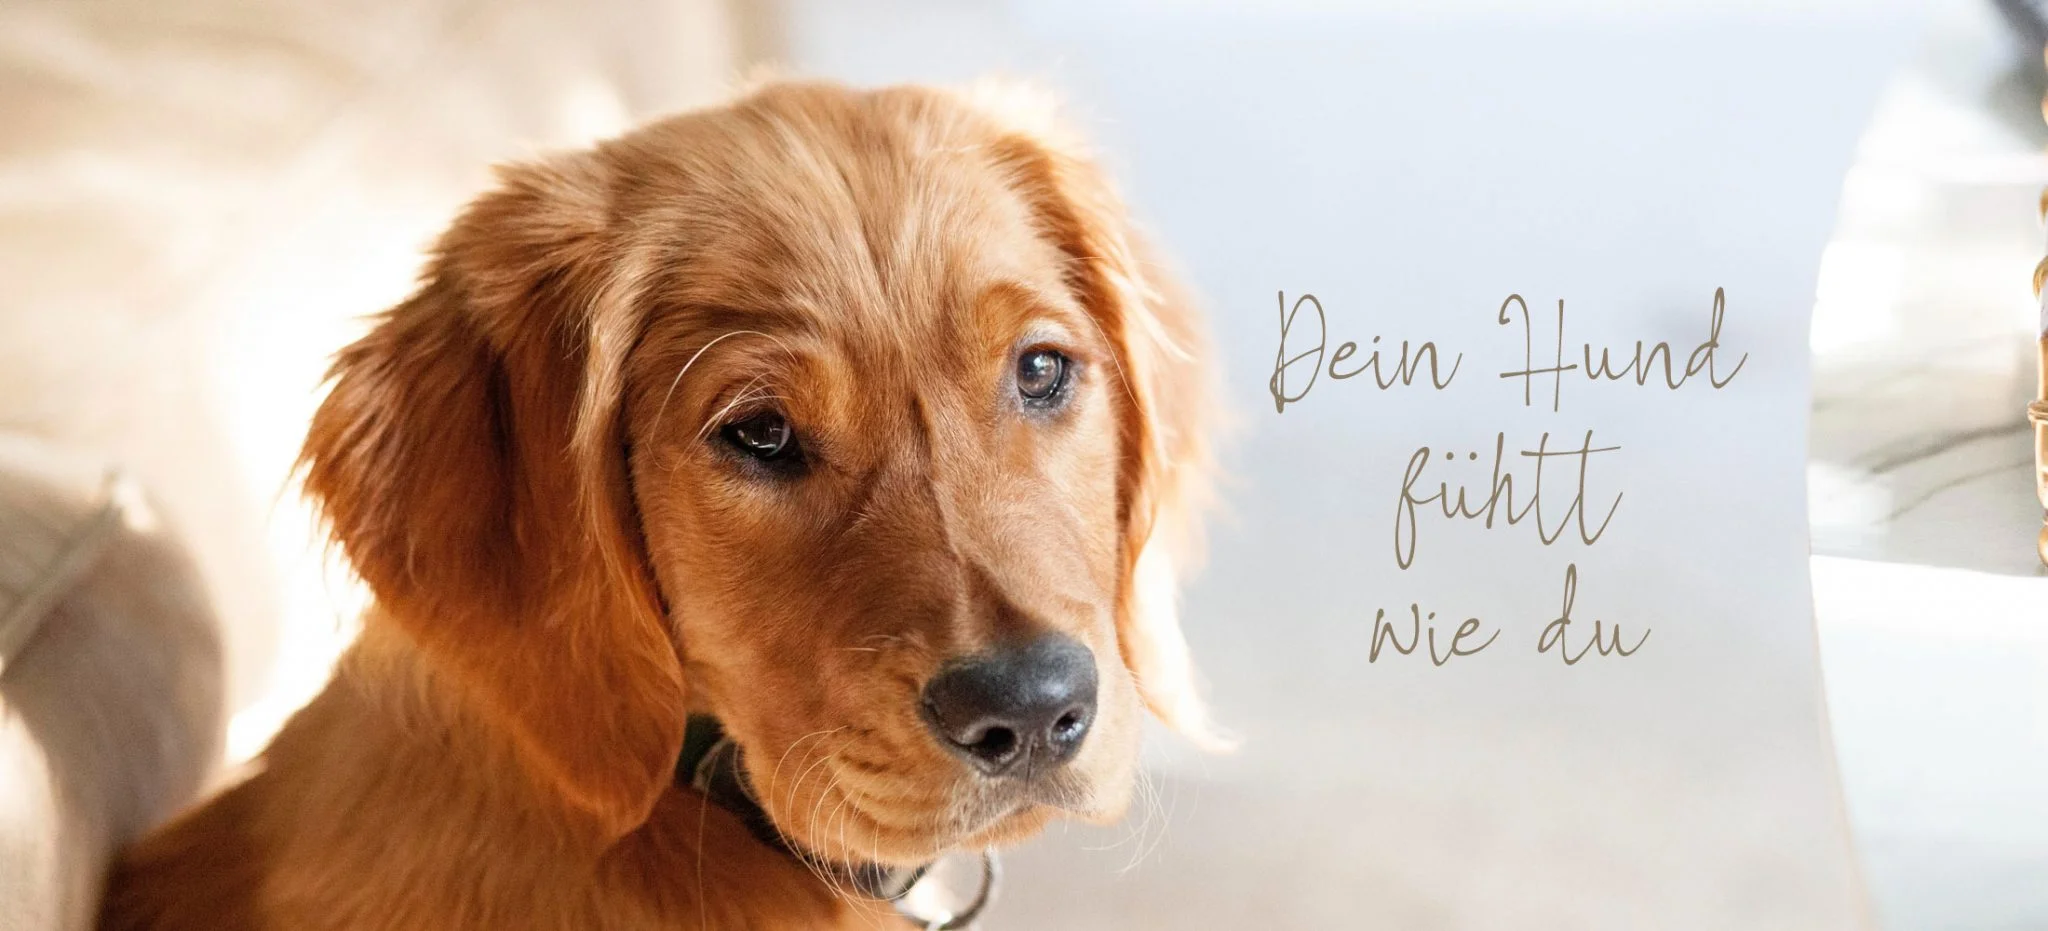 Dog Human Walk Hundeschule Hundepsychologe Hundetraining Bitburg Trier Wittlich Gesundheit